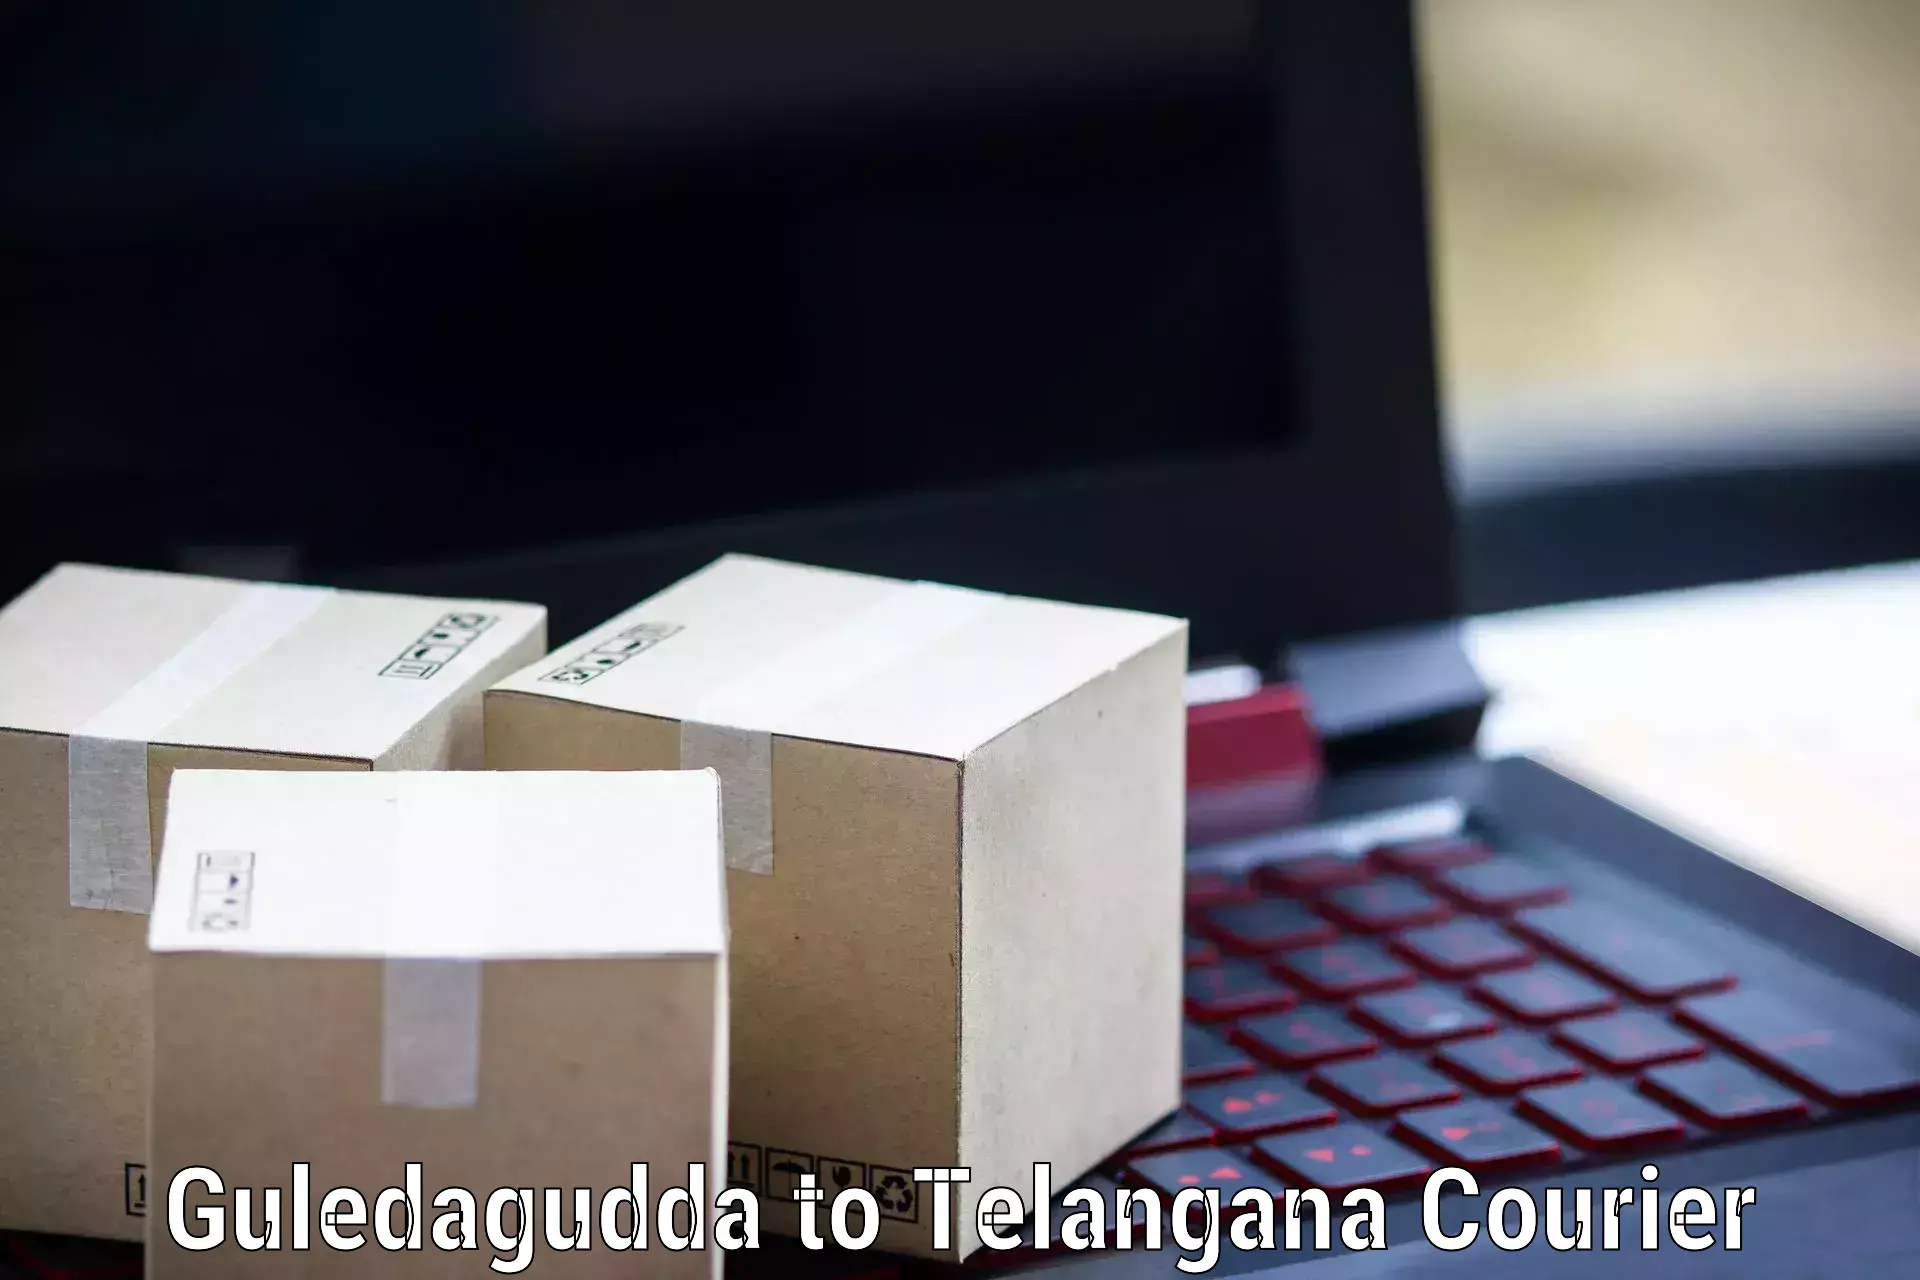 Round-the-clock parcel delivery in Guledagudda to Warangal